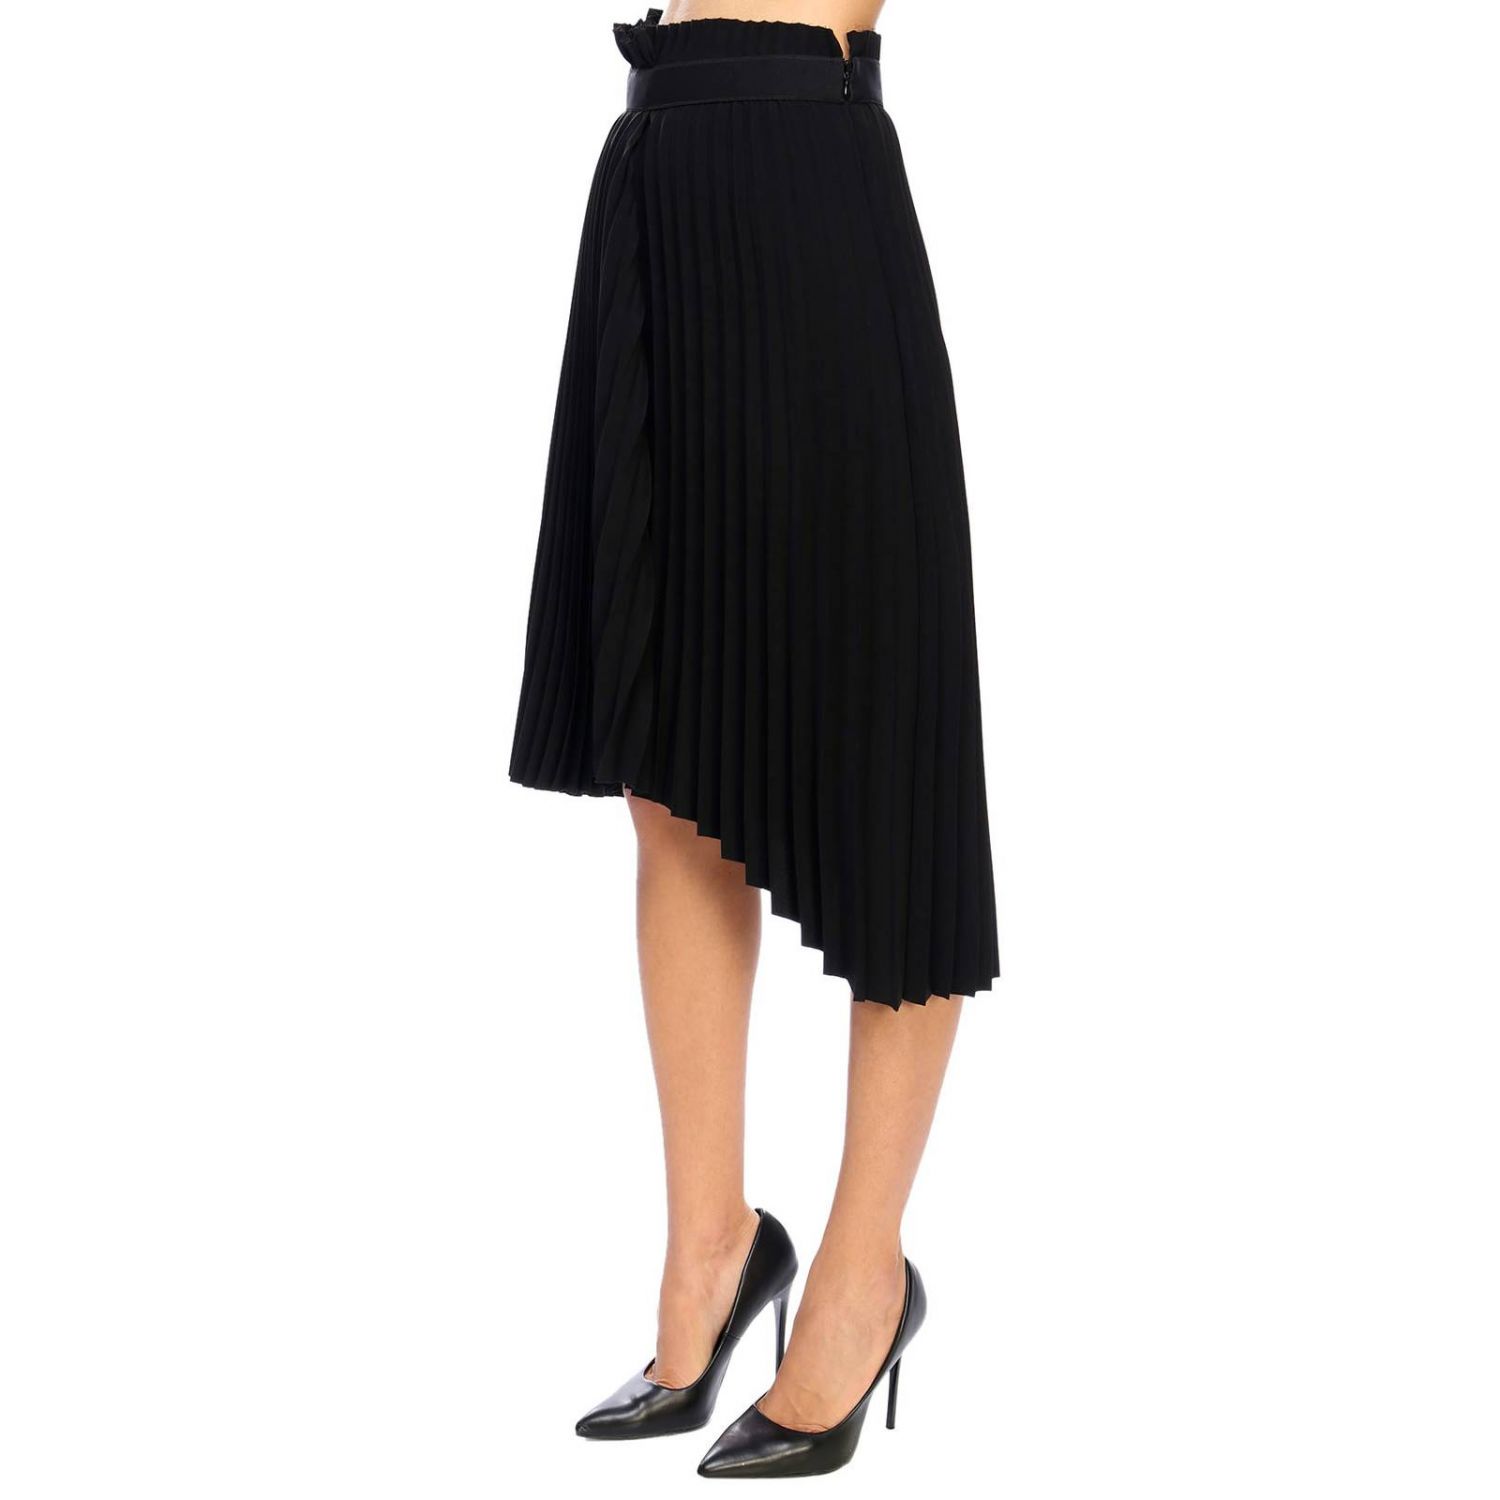 BALENCIAGA: Skirt women - Black | Skirt Balenciaga 529757 TYD15 GIGLIO.COM